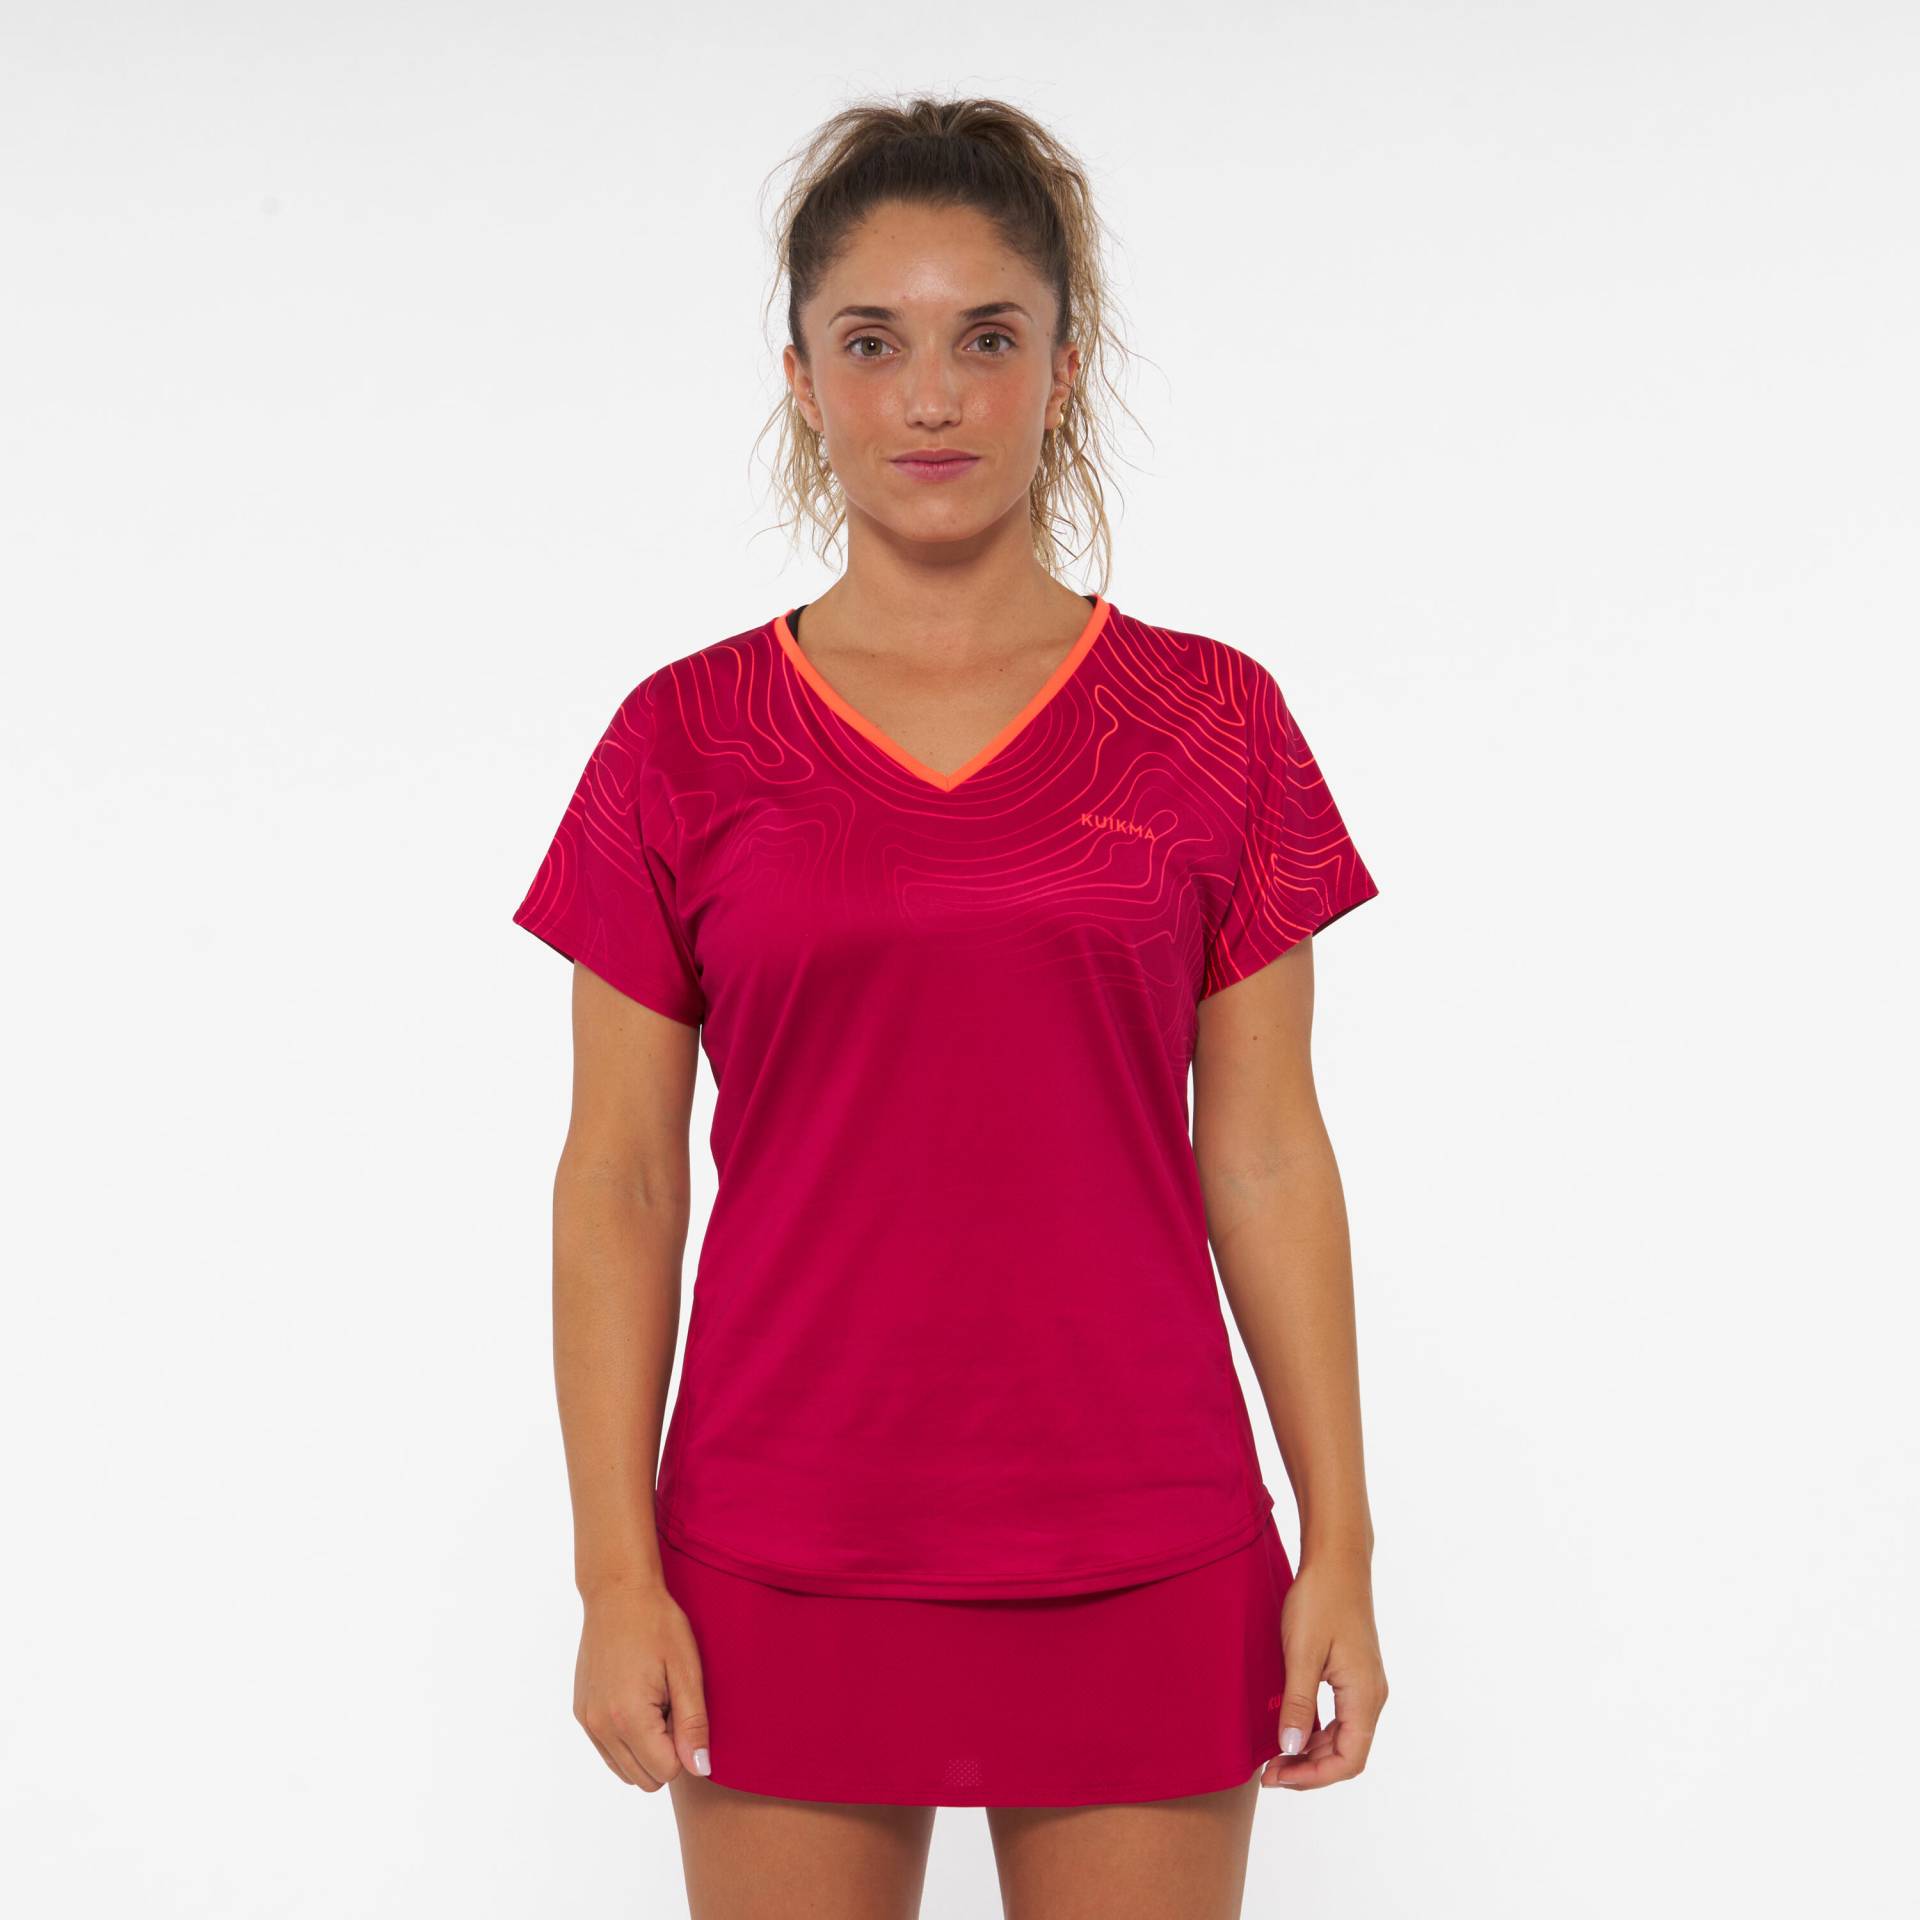 Damen Padel T-Shirt kurzarm atmungsaktiv - PTS 500 rot von KUIKMA